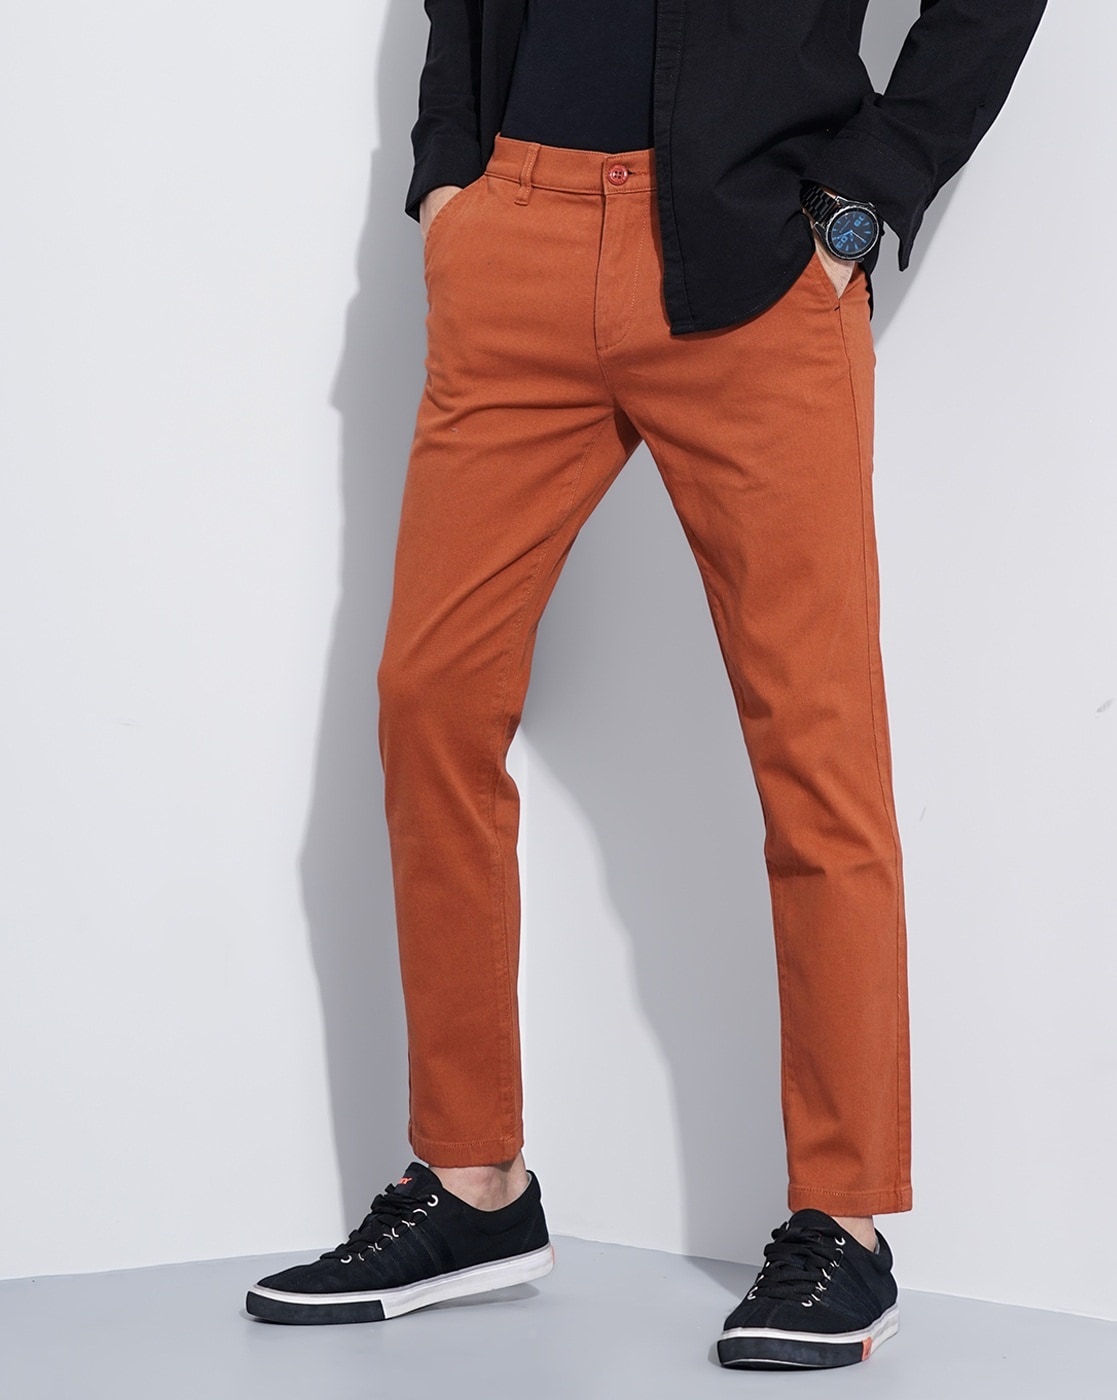 CONCITOR Mens Dress Pants Trousers Flat Front Slacks Solid Orange Color 48   Amazonin Clothing  Accessories